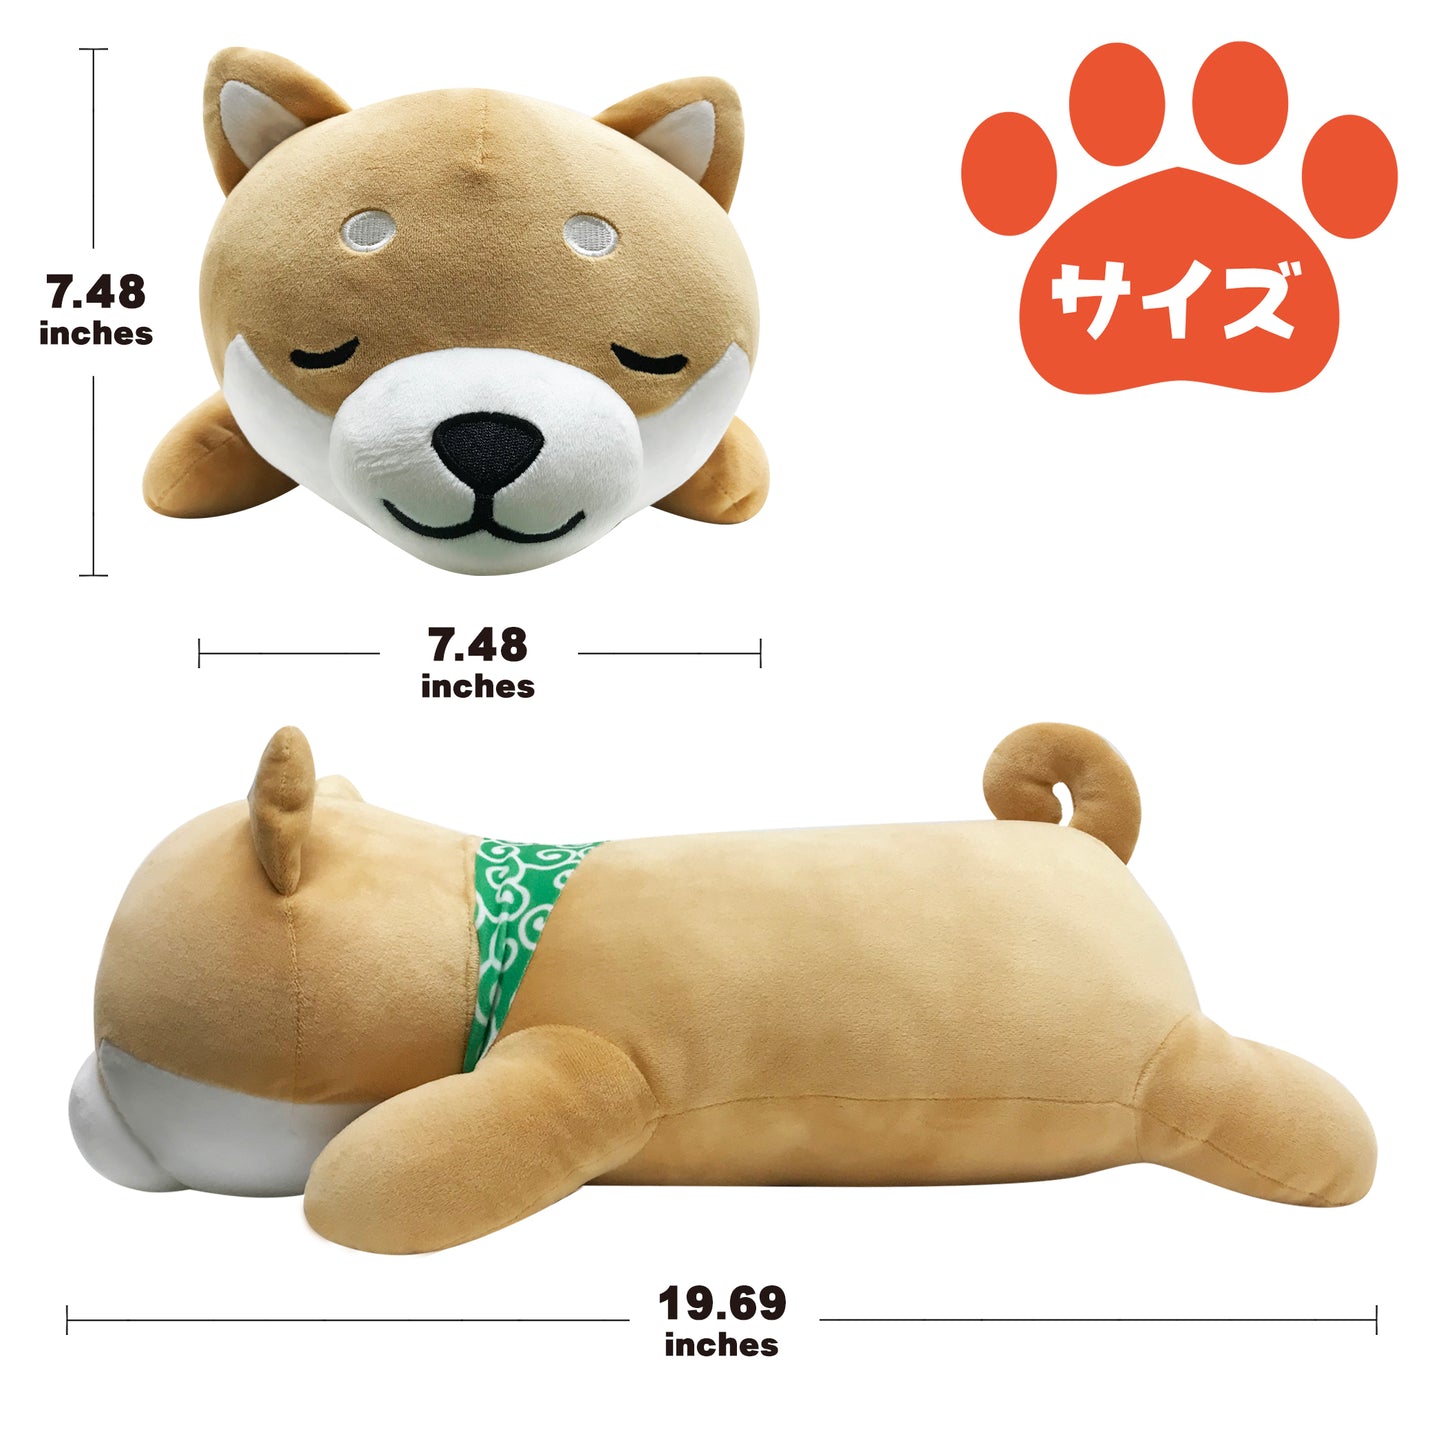 Size of stuffed dog Mameshiba brown pillow